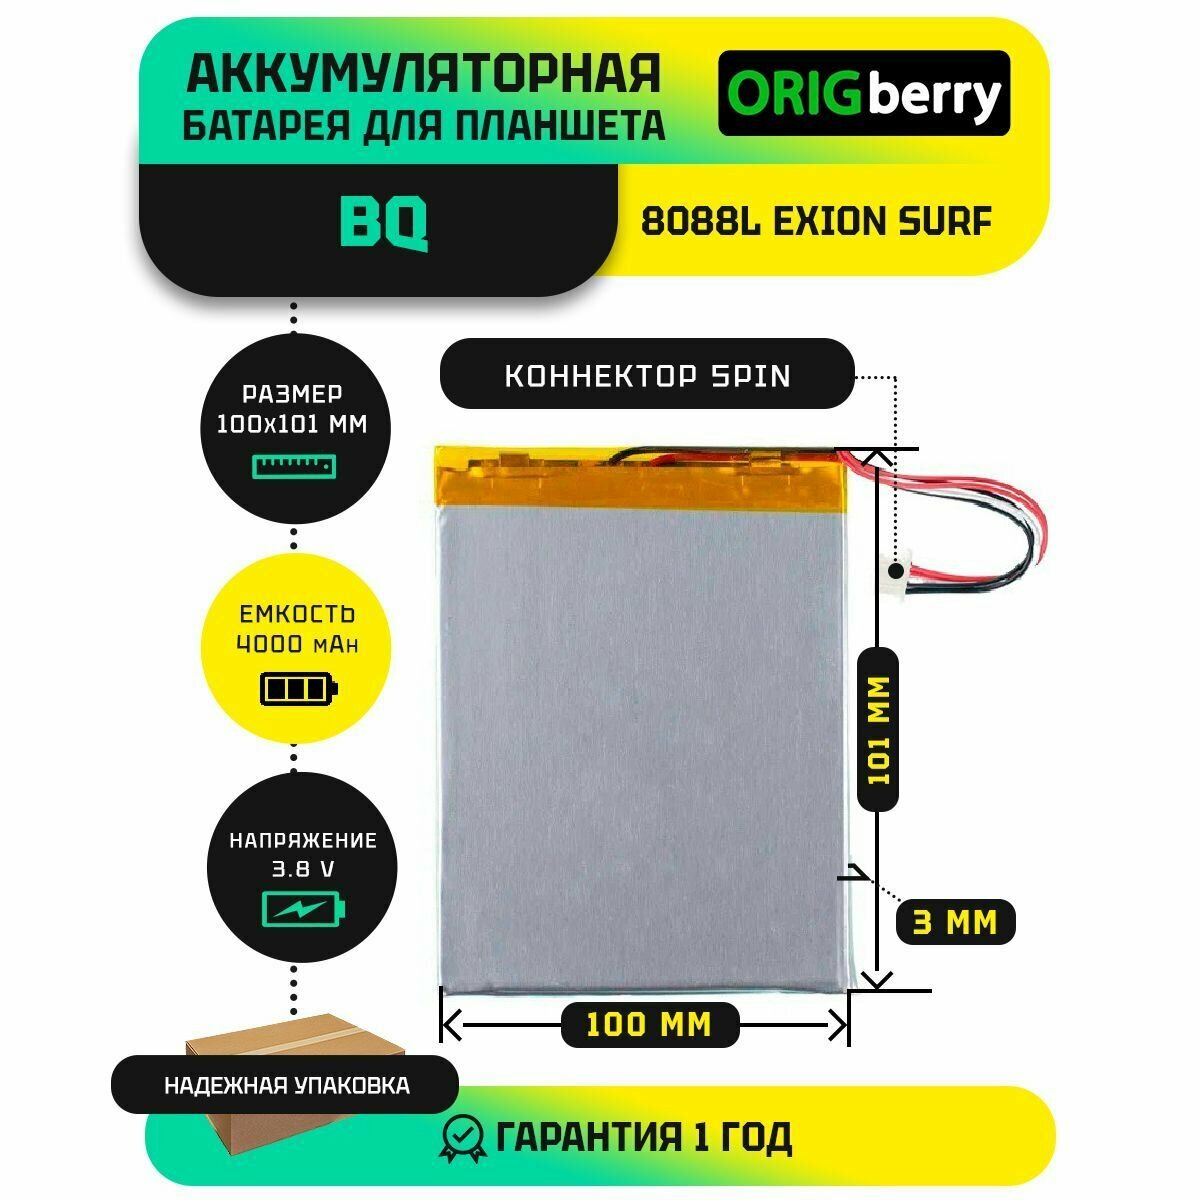 Аккумулятор для планшета BQ 8088L Exion Surf 3,8 V / 4000 mAh / 101мм x 100мм / коннектор 5 PIN